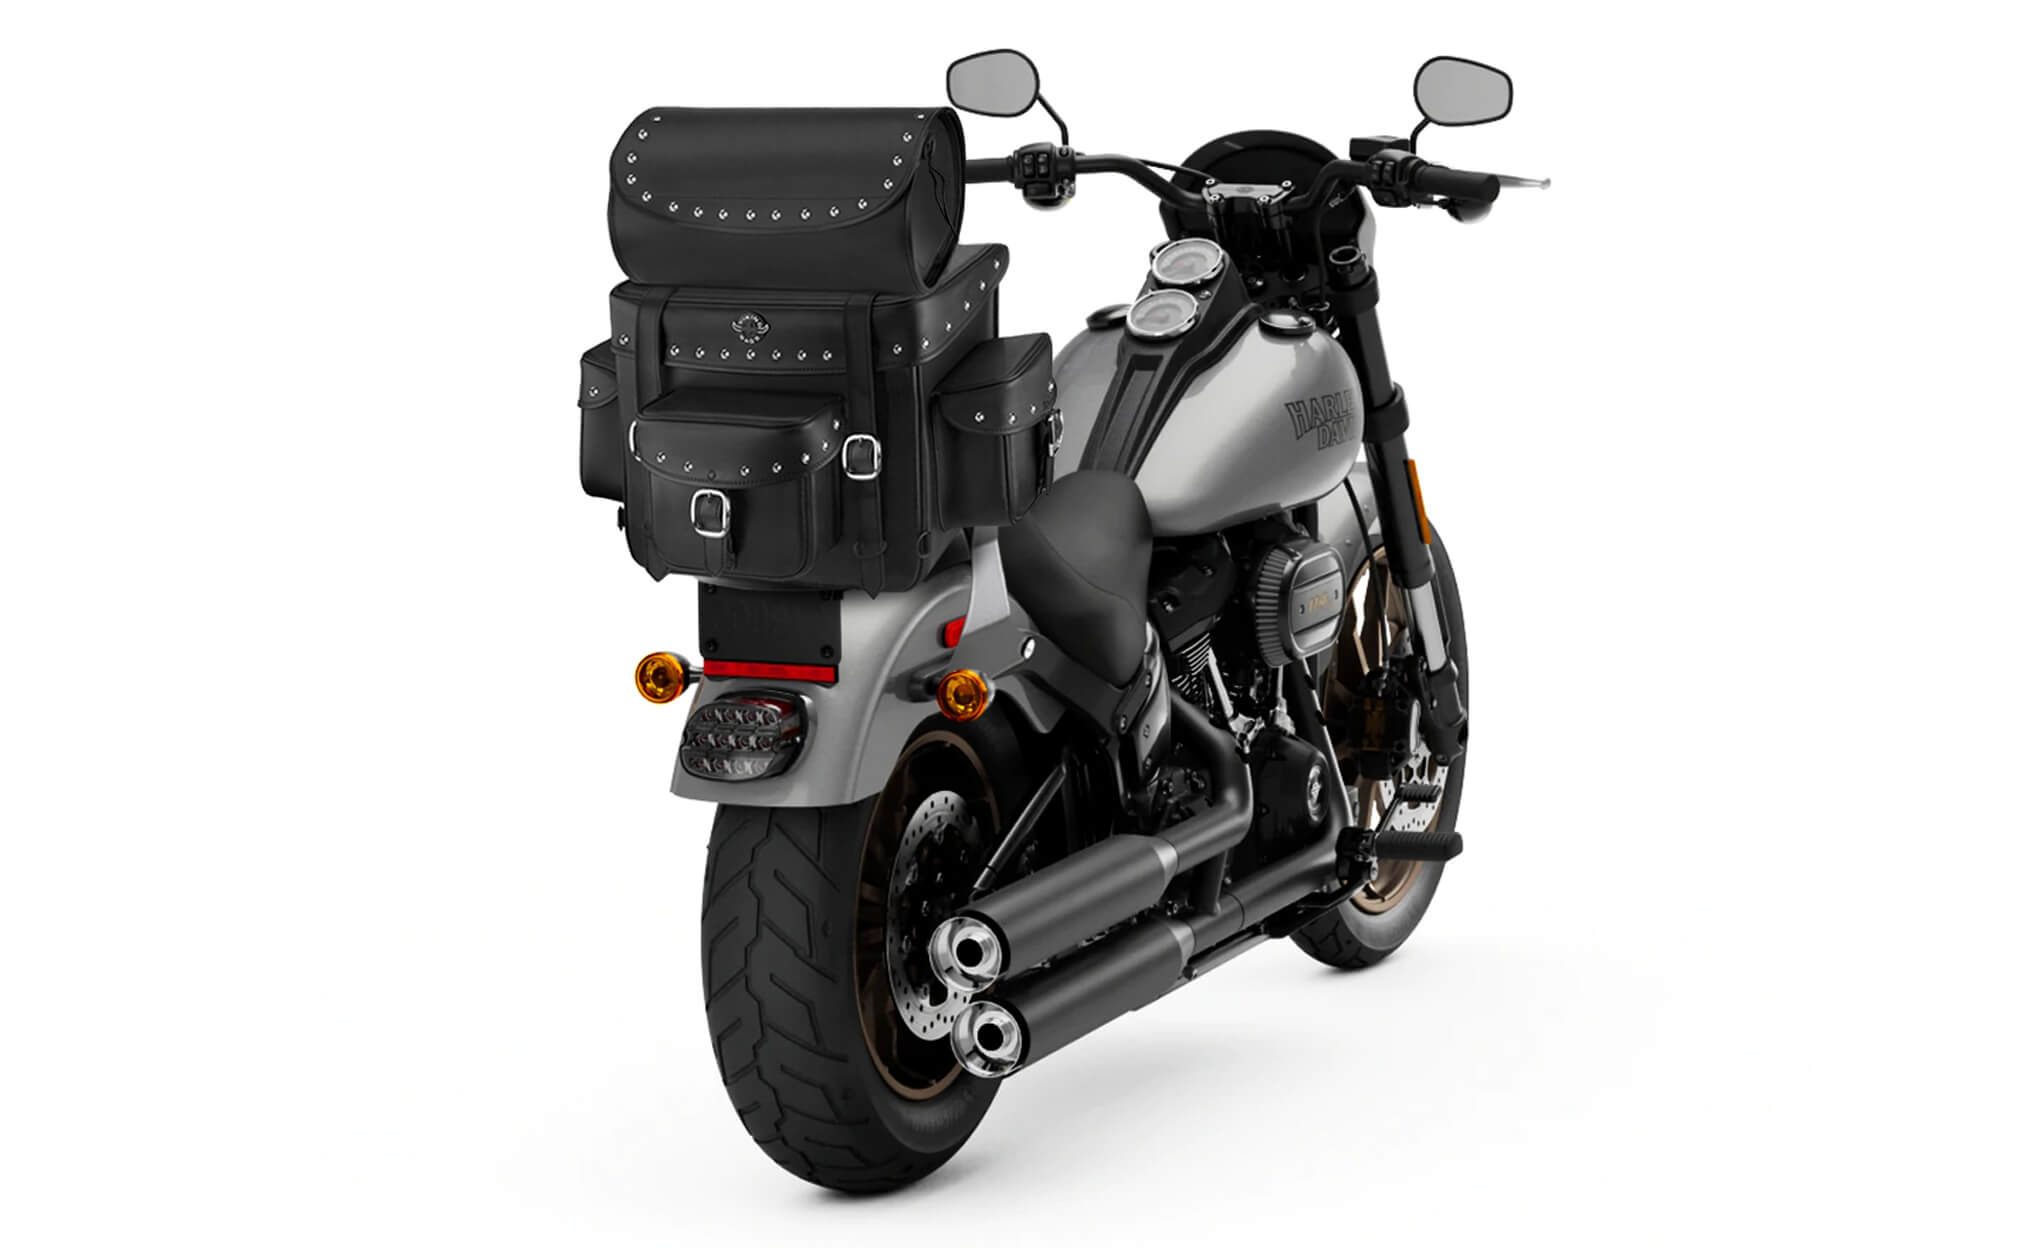 Viking Revival Series Large Suzuki Studded Motorcycle Sissy Bar Bag Bag on Bike View @expand